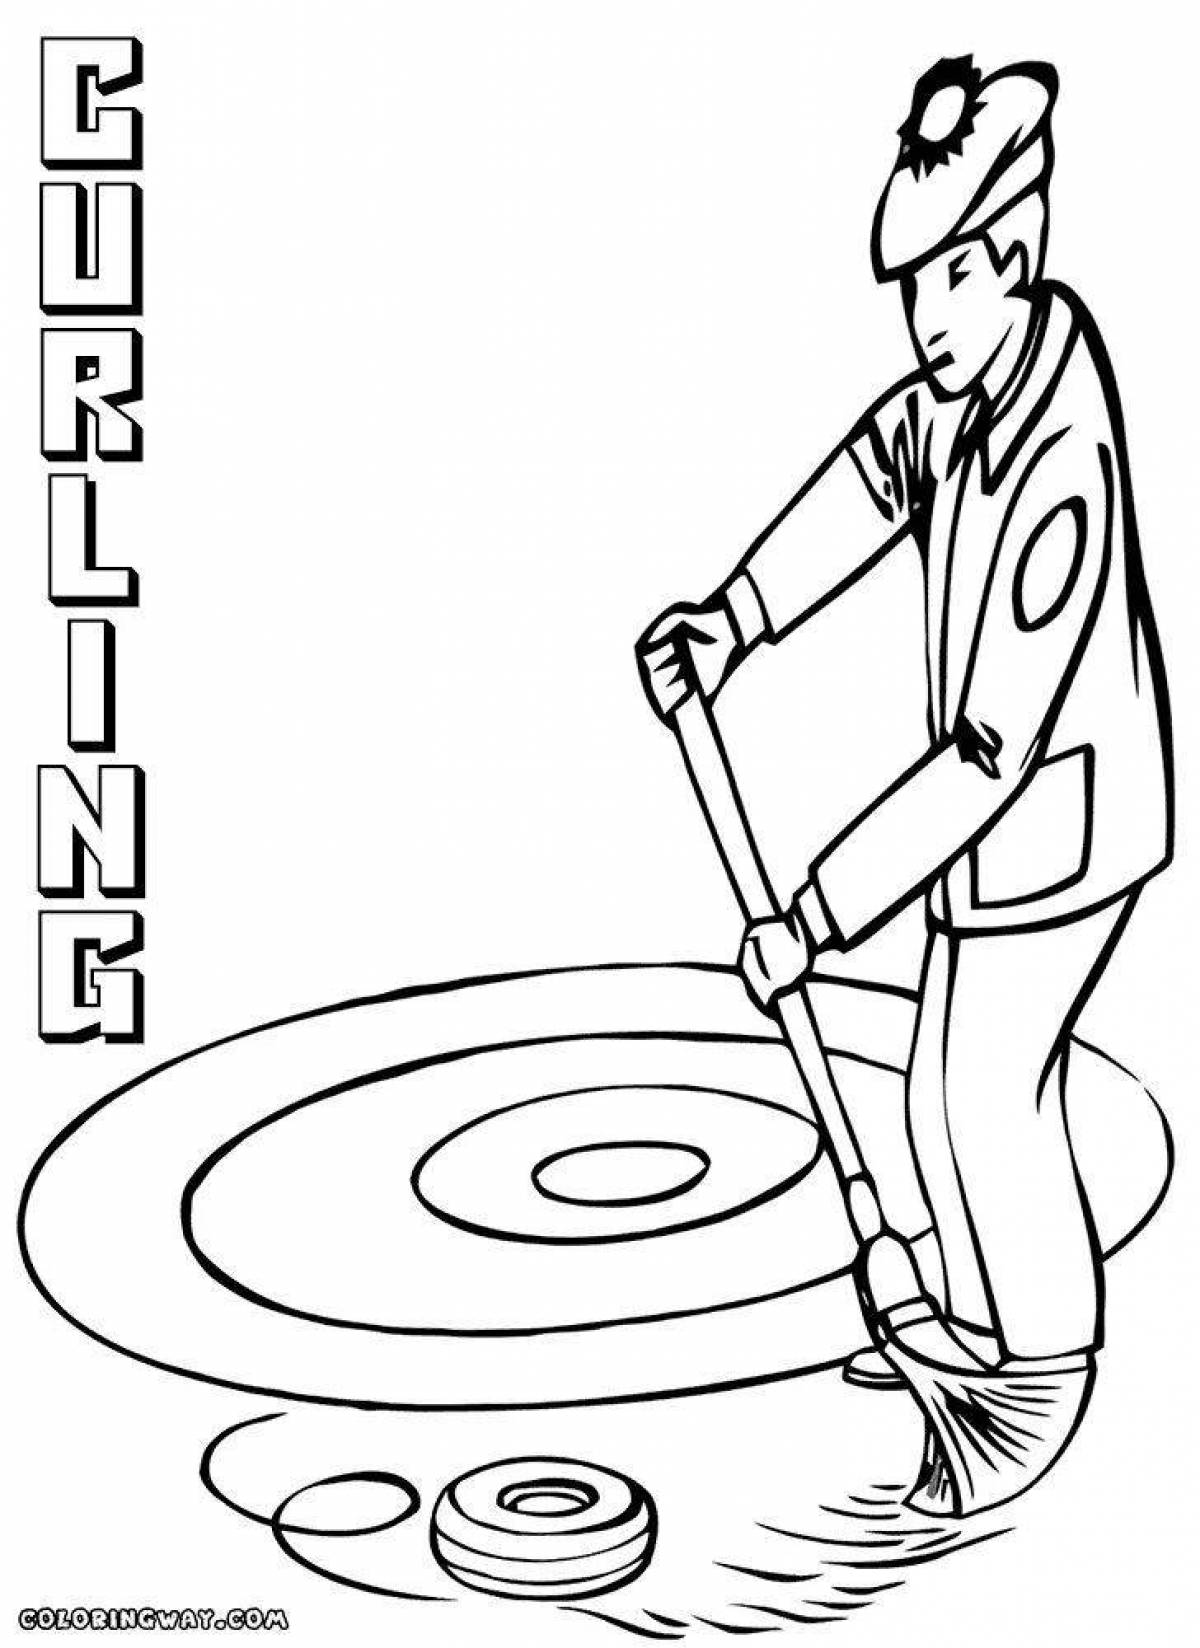 Violent curling coloring book